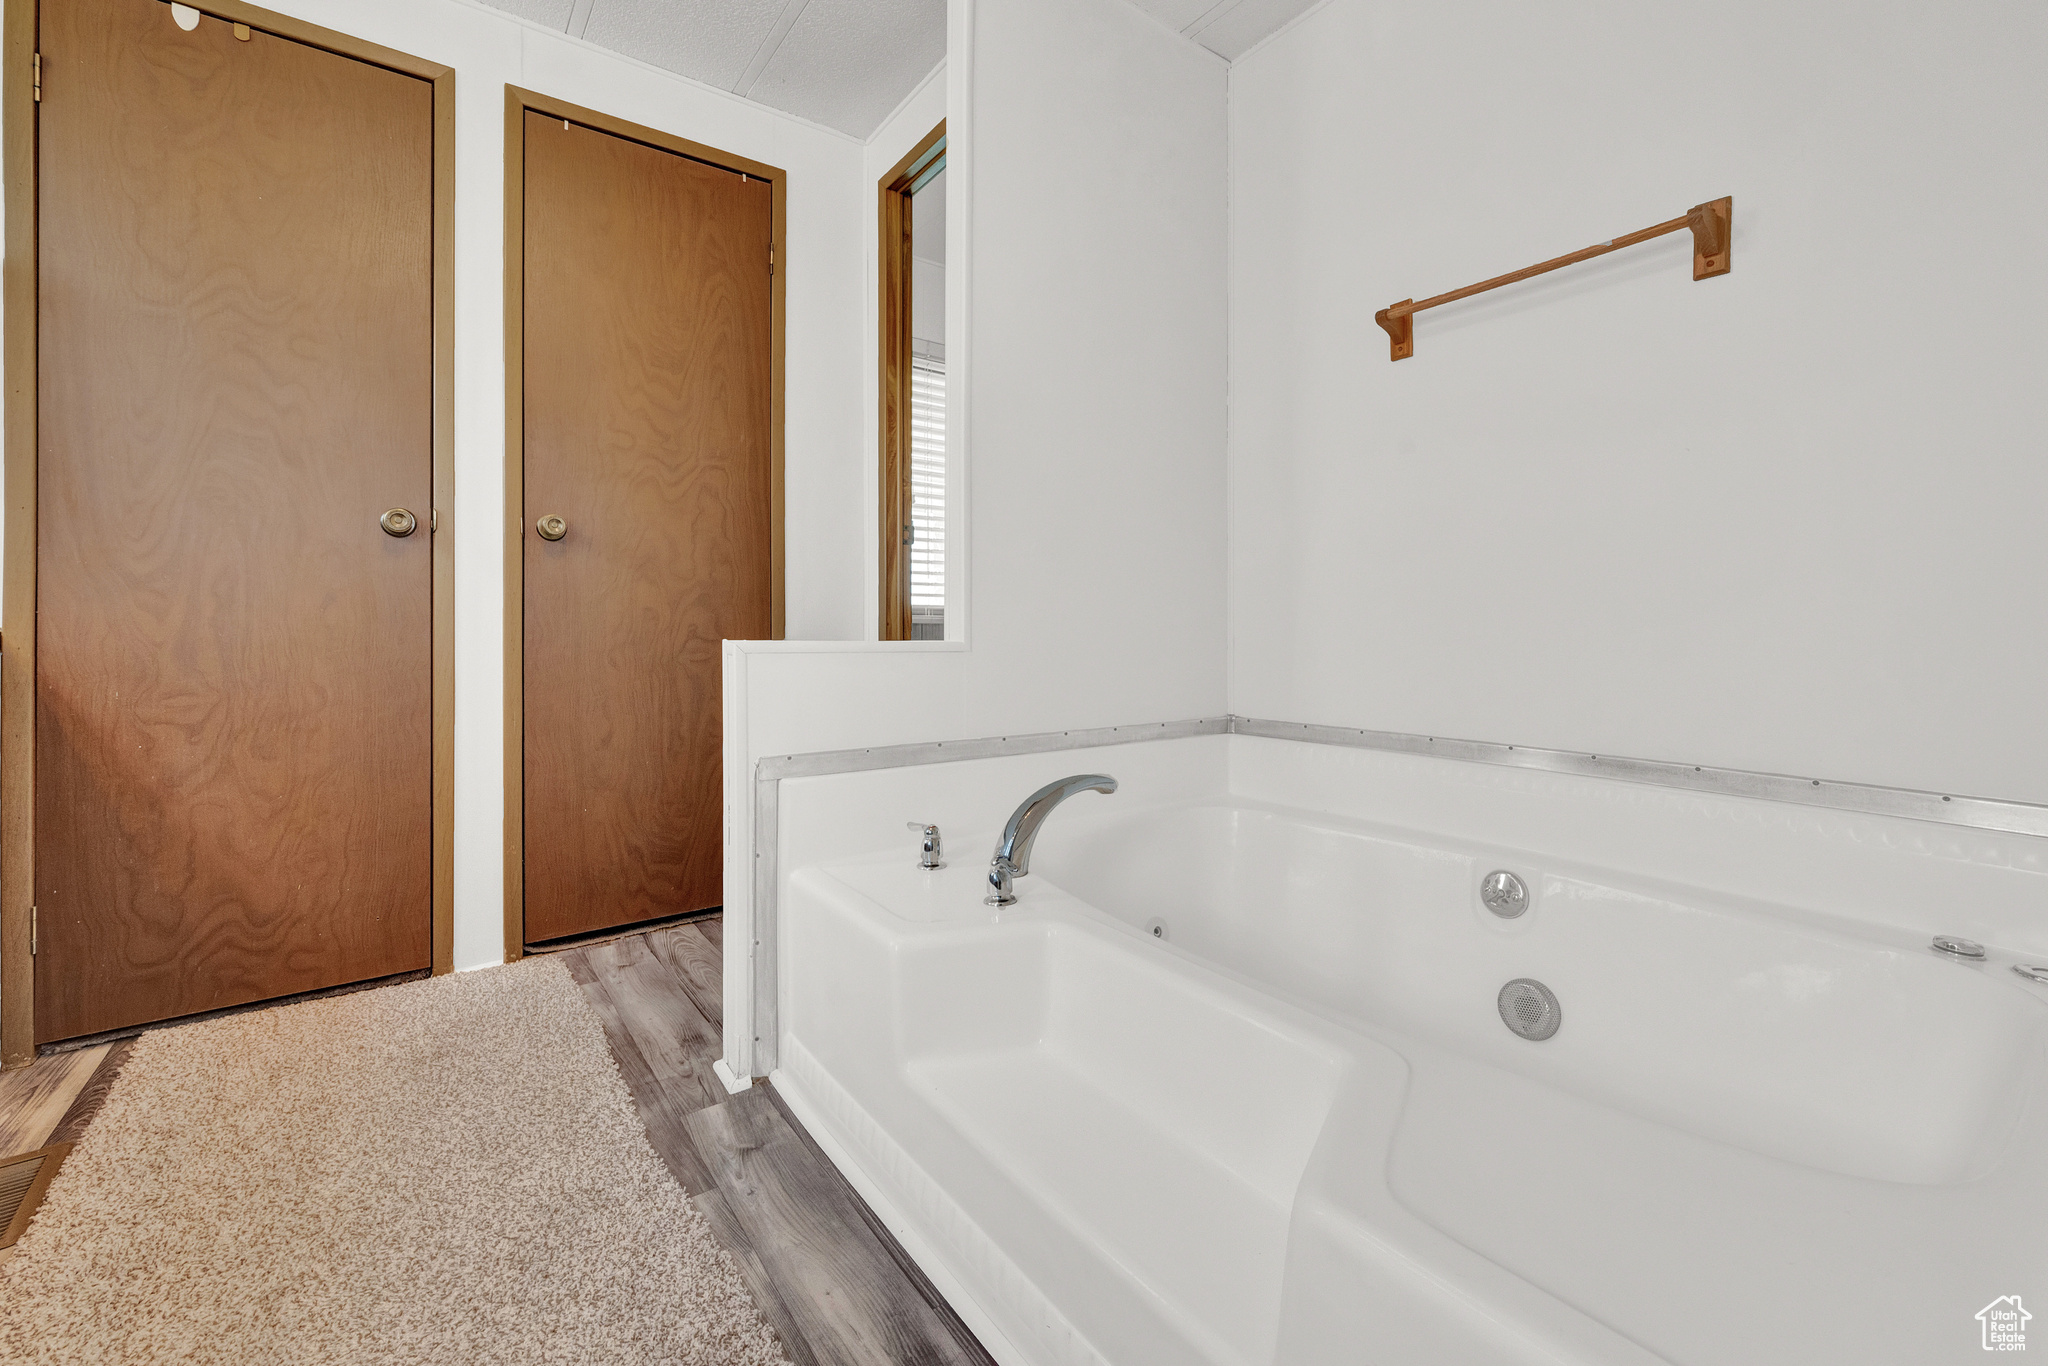 Bathroom with a bath and hardwood / wood-style flooring